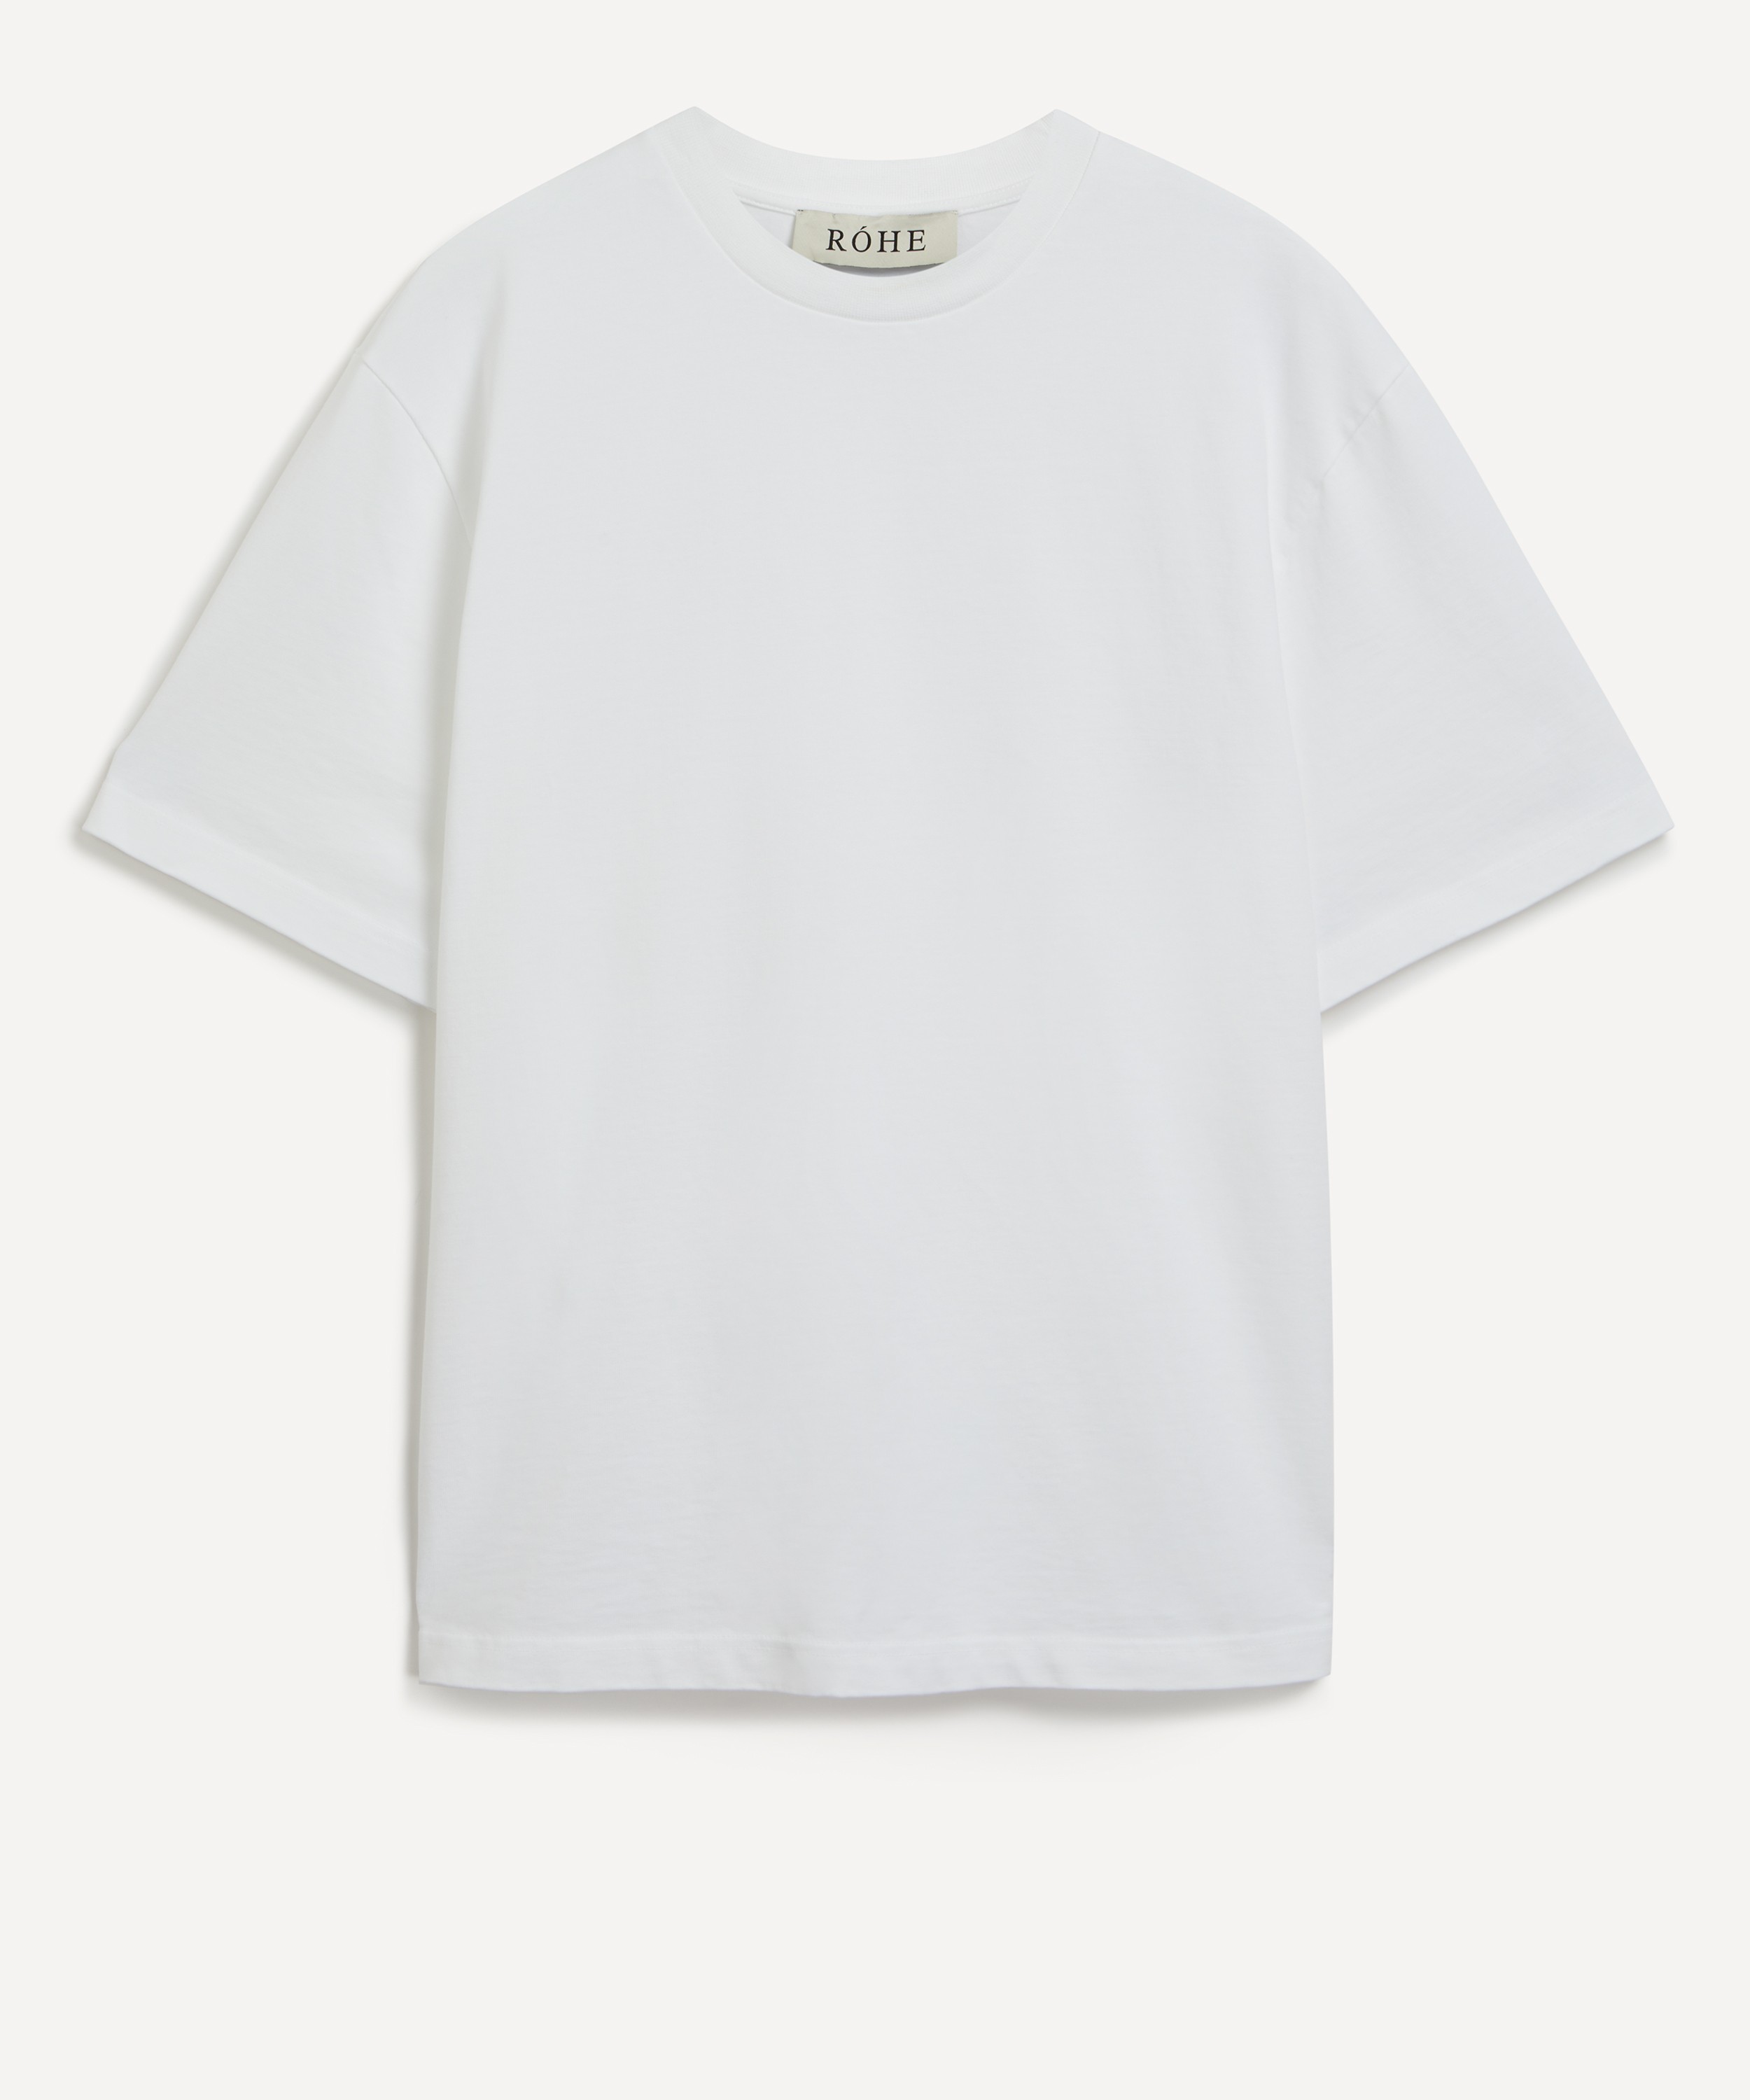 Róhe - Oversized T-Shirt image number 0